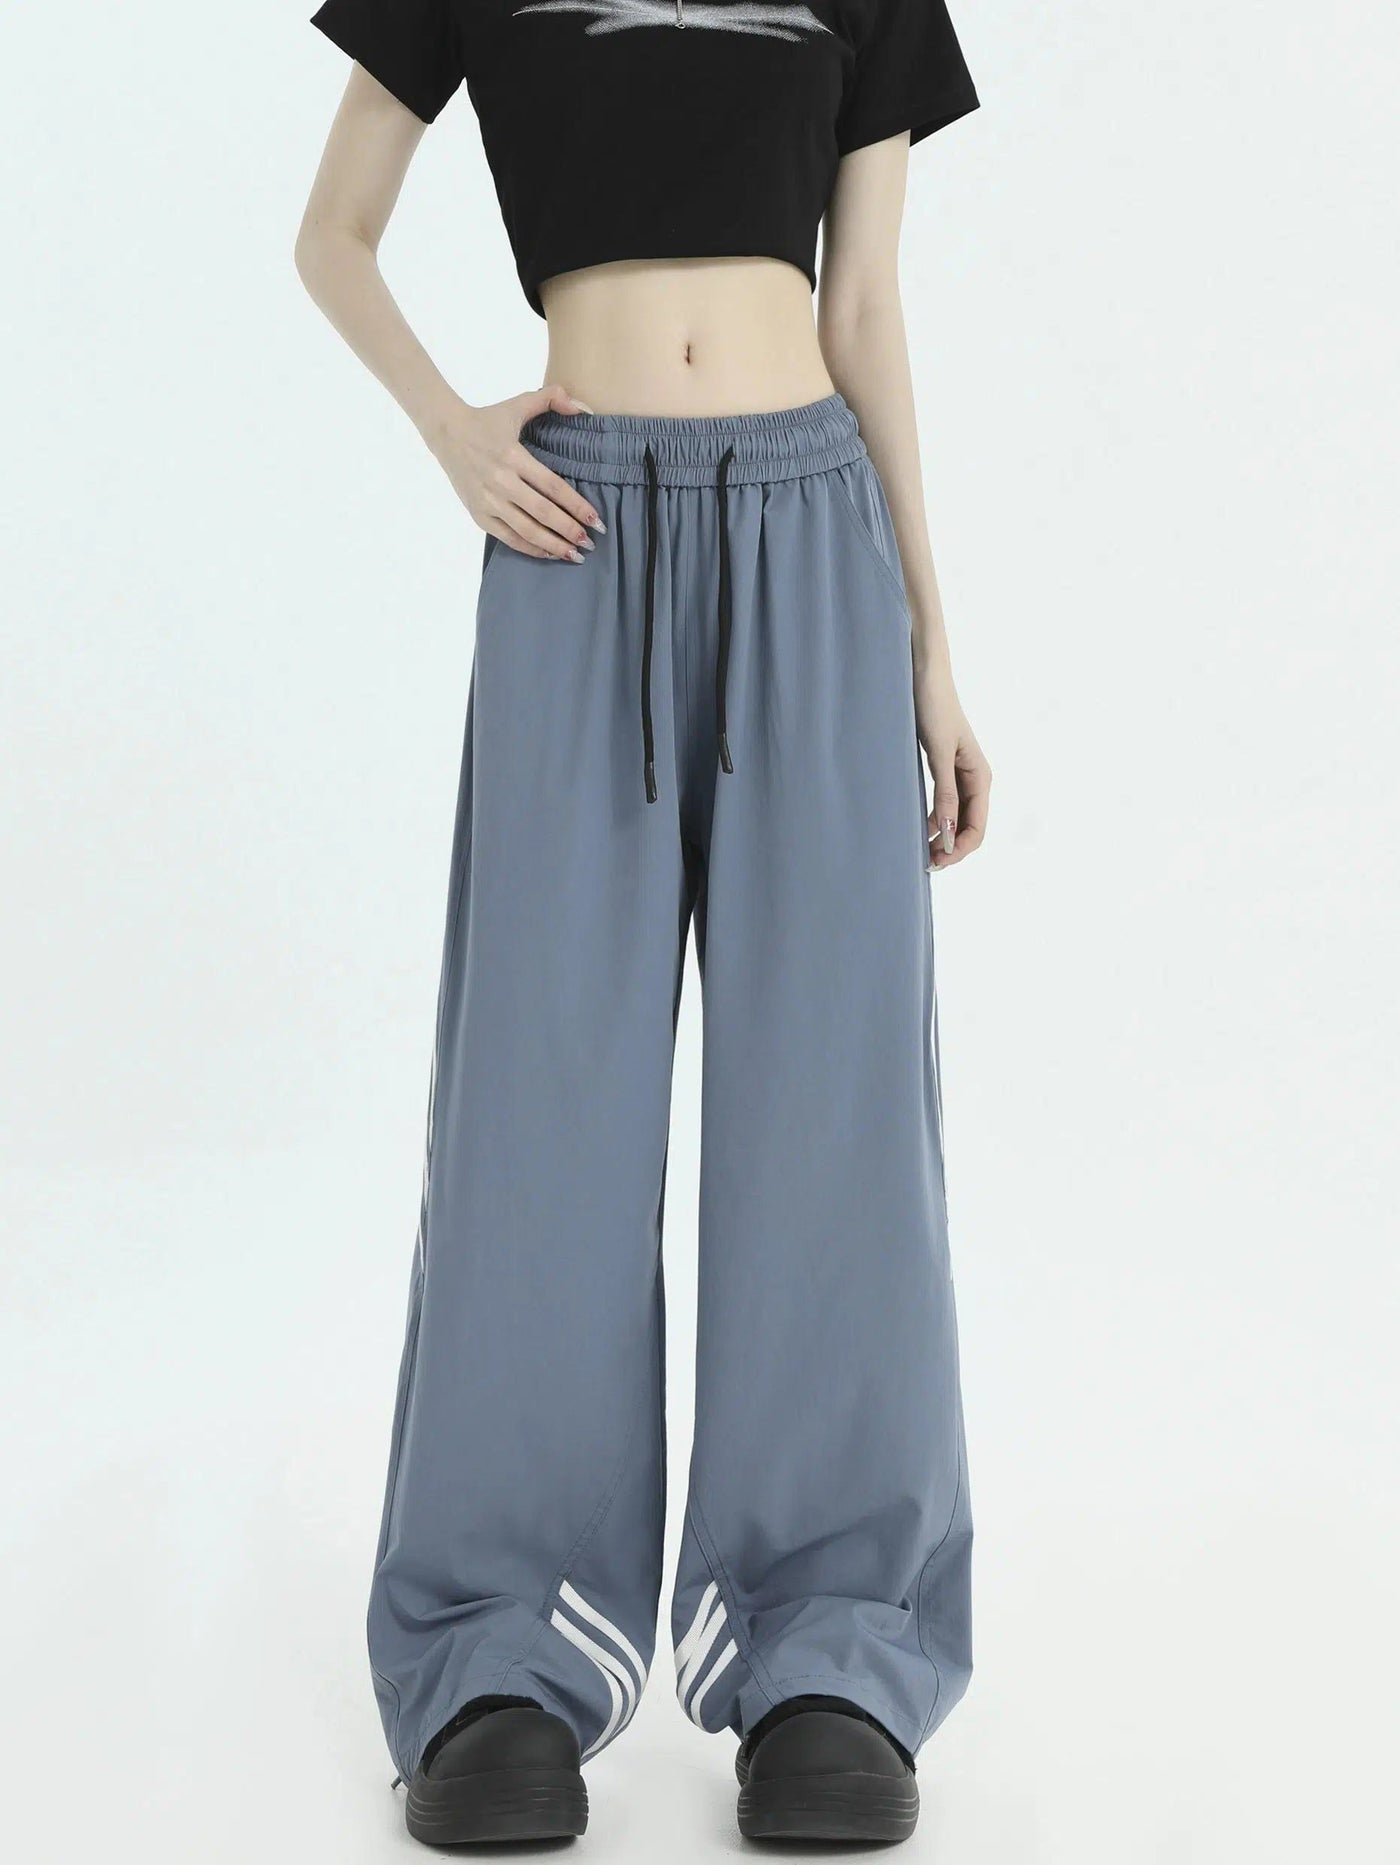 Athleisure Gartered Track Pants Korean Street Fashion Pants By INS Korea Shop Online at OH Vault